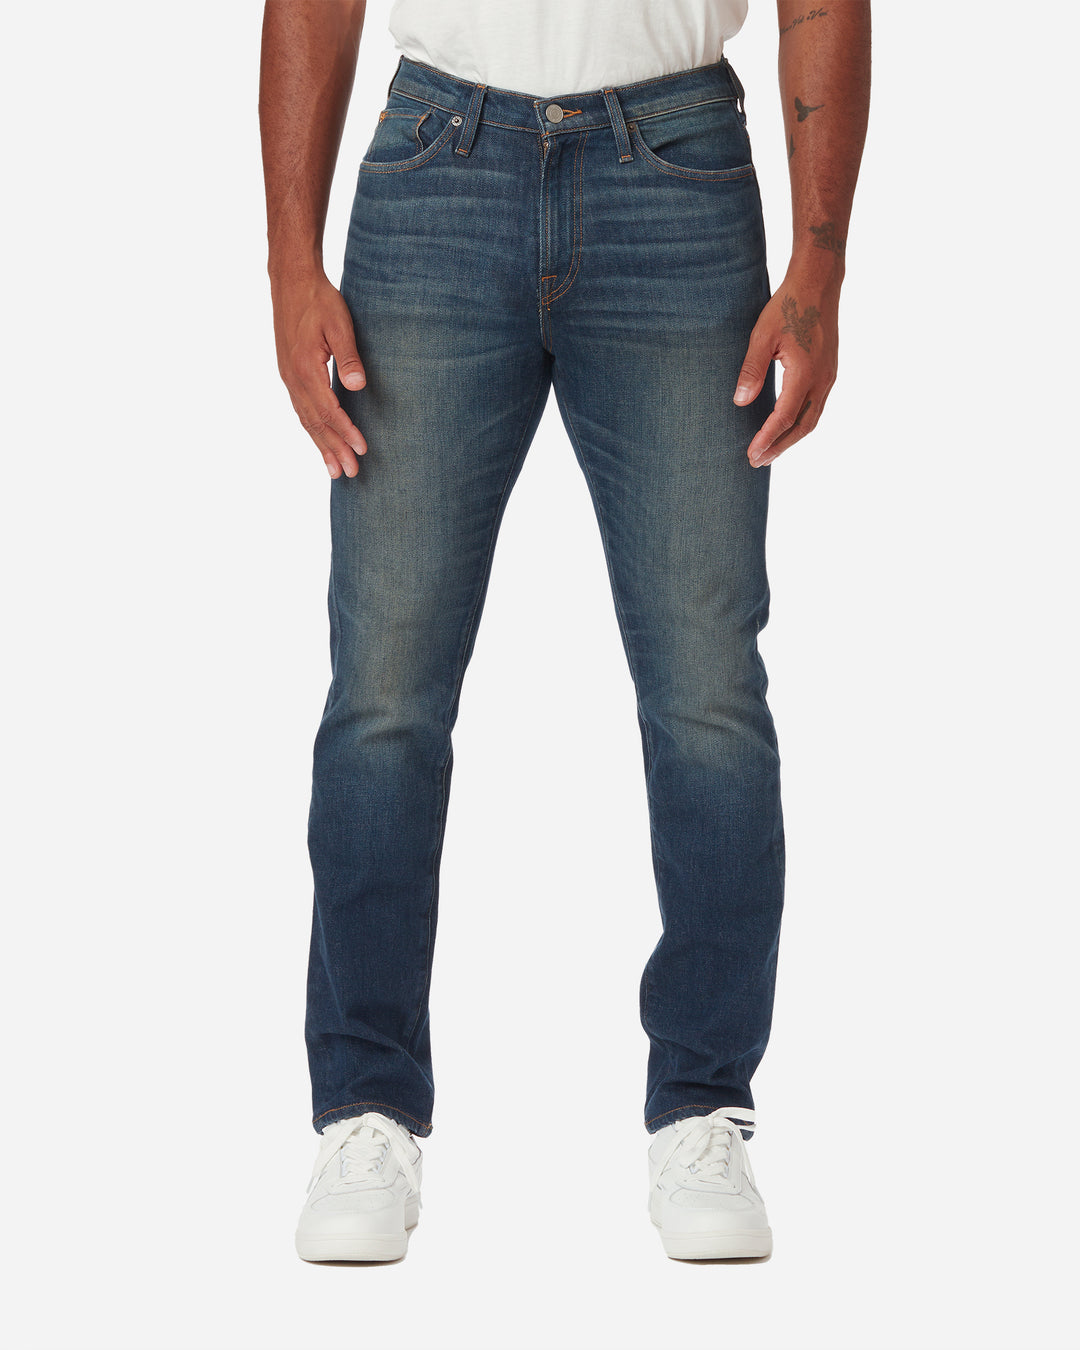 Men's Designer Athletic Taper Jeans